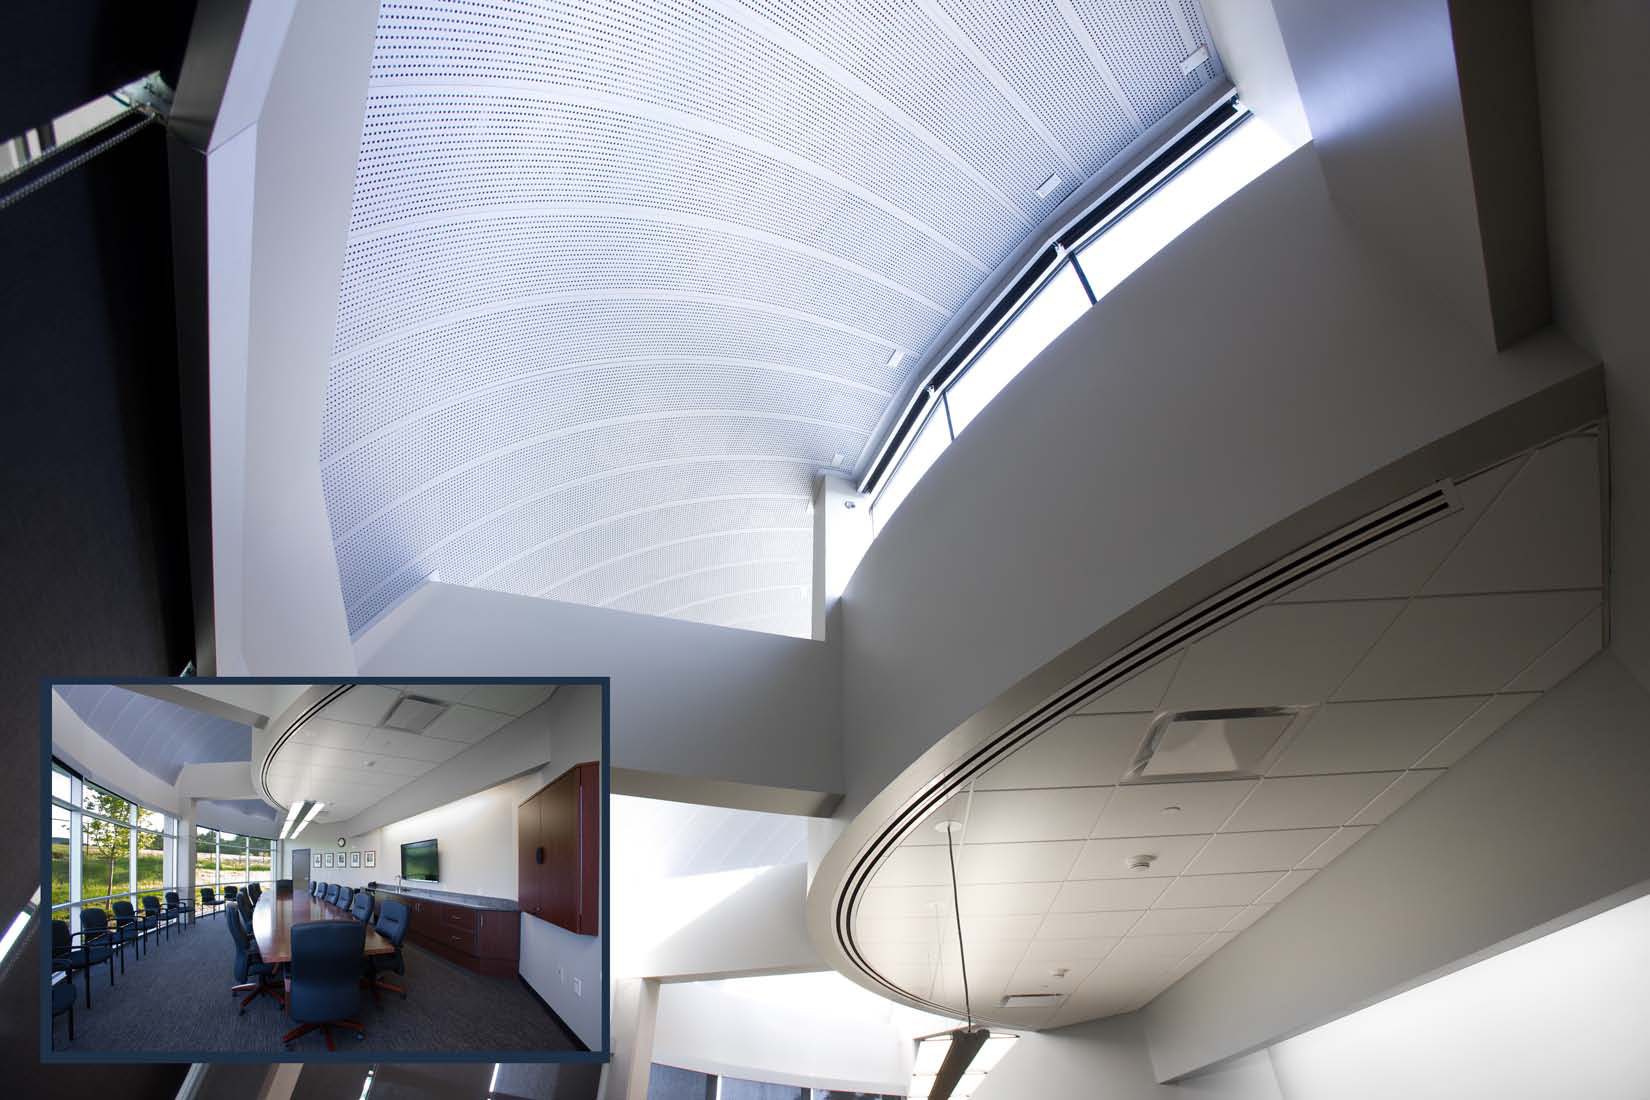 CurviForm Perforated Metal Ceilings with Compund Radii